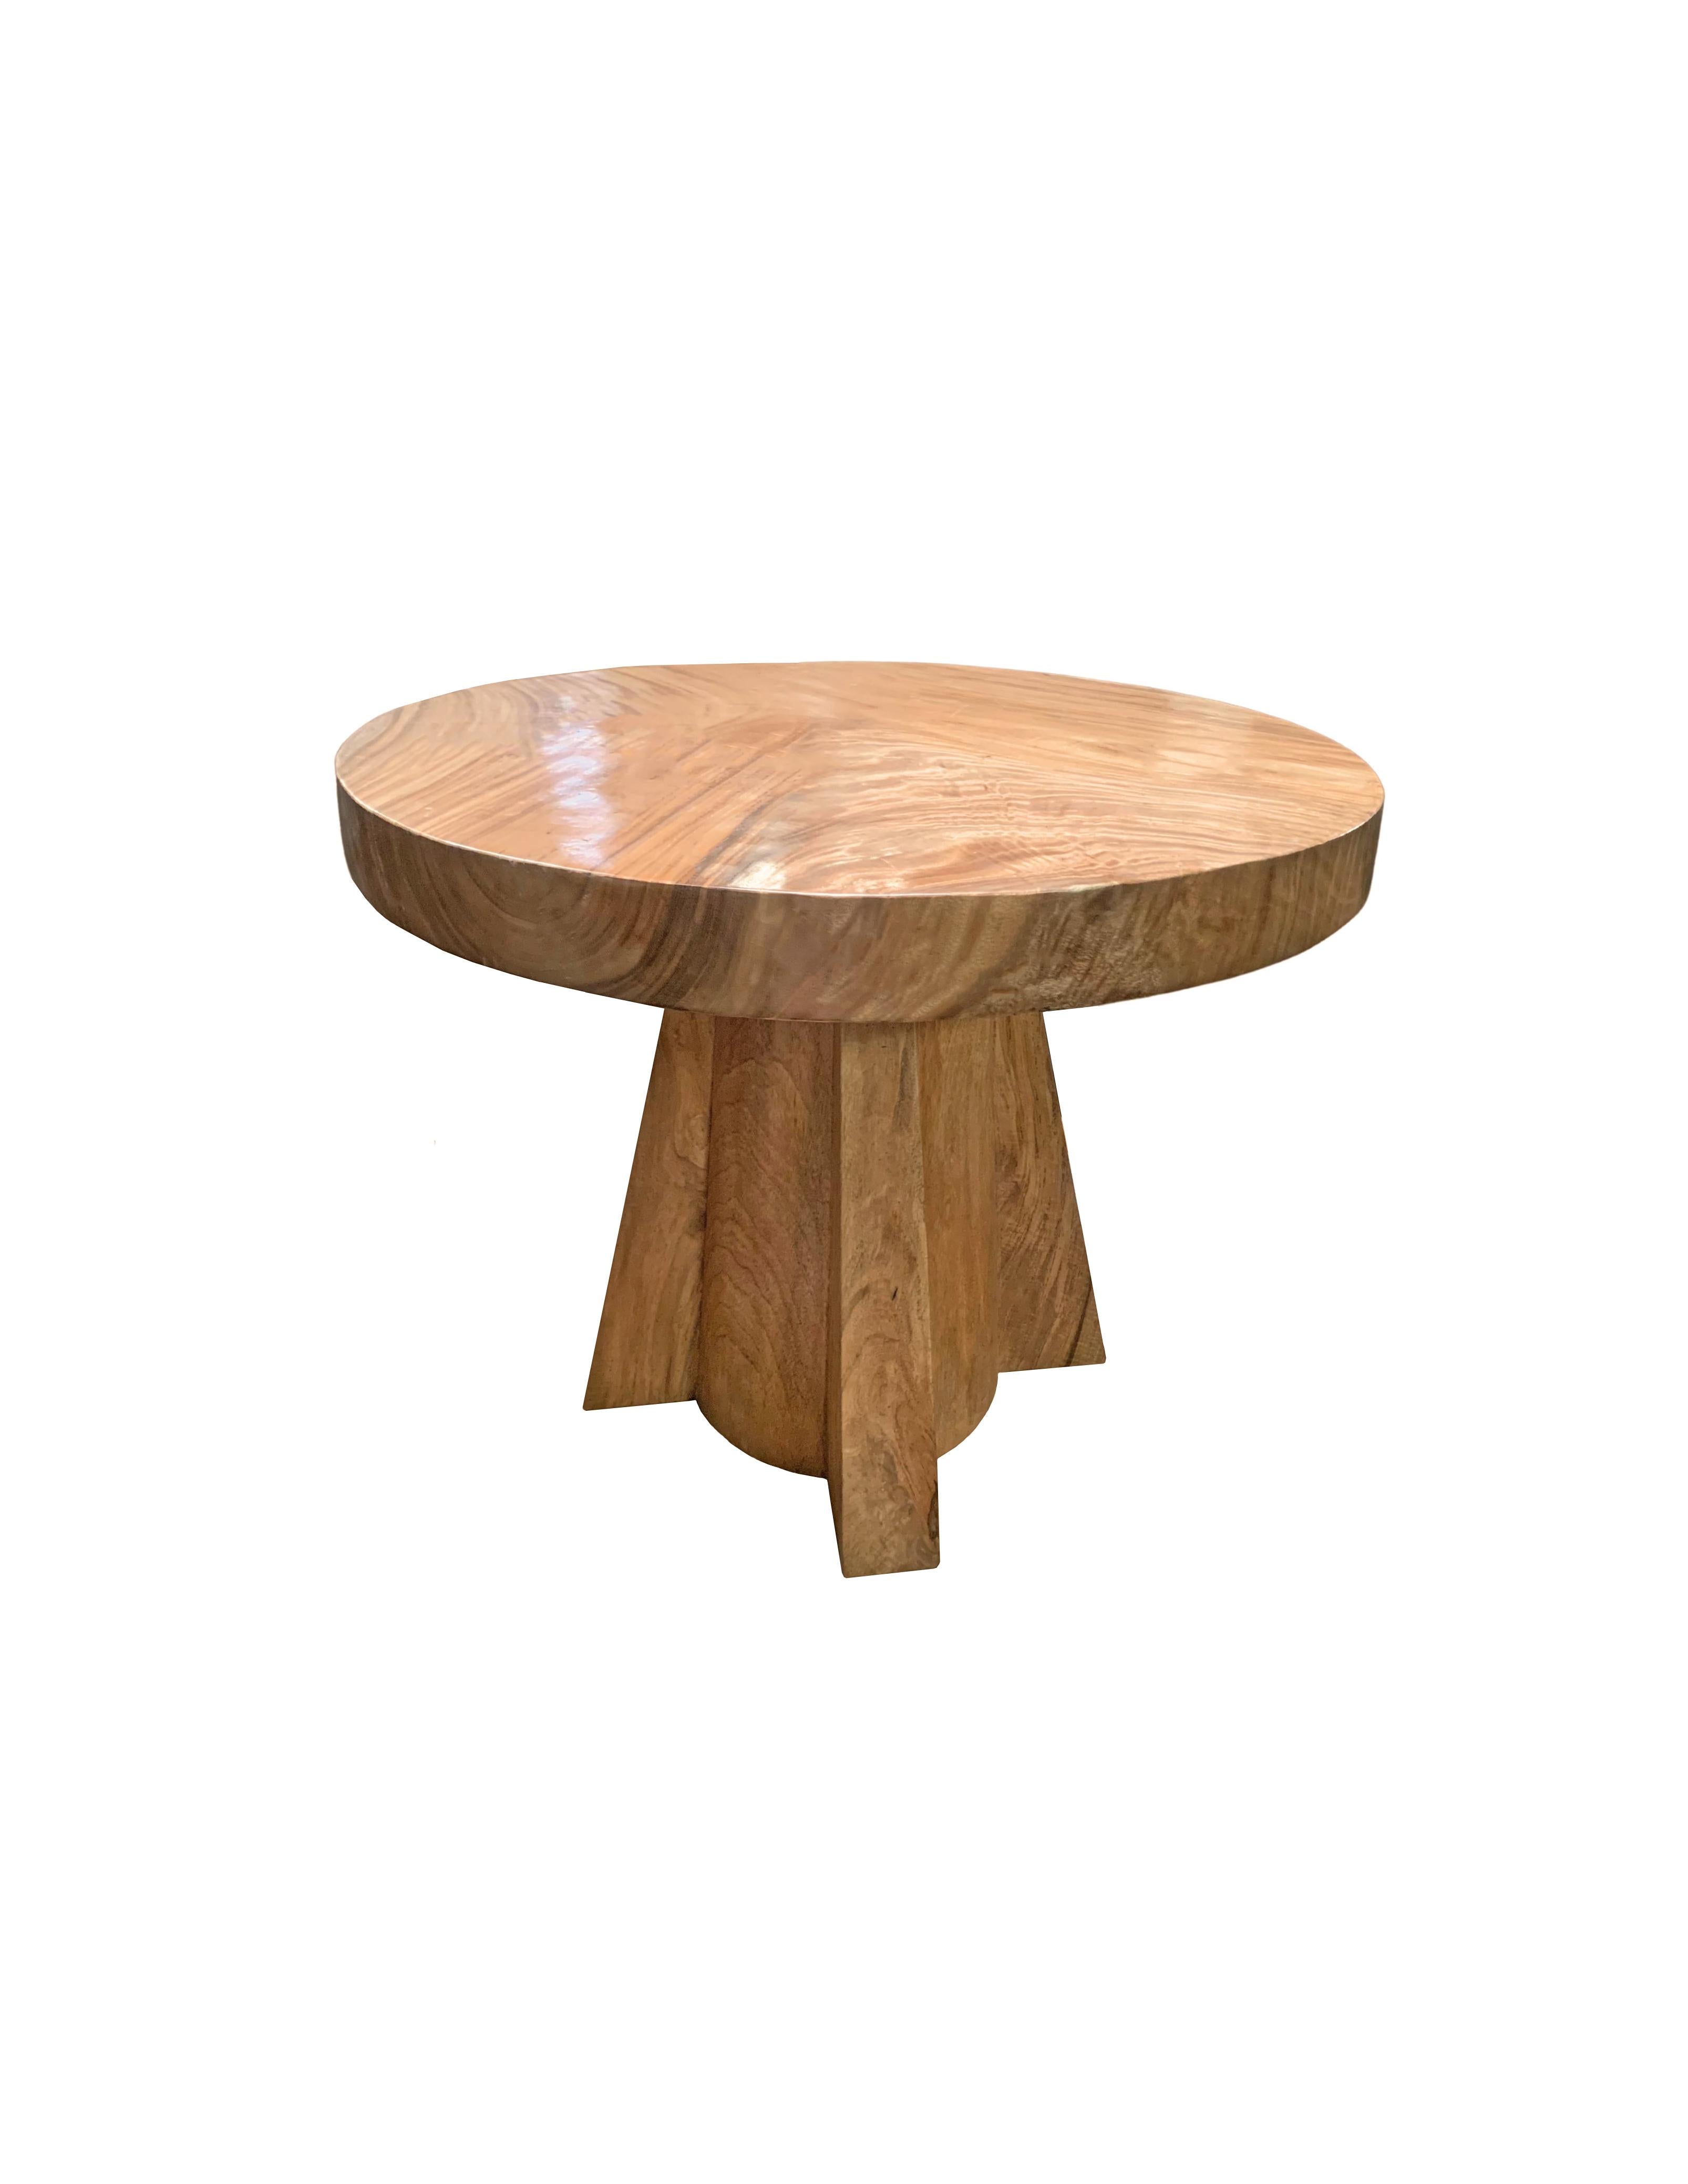 Organic Modern Sculptural Suar Wood Round Table